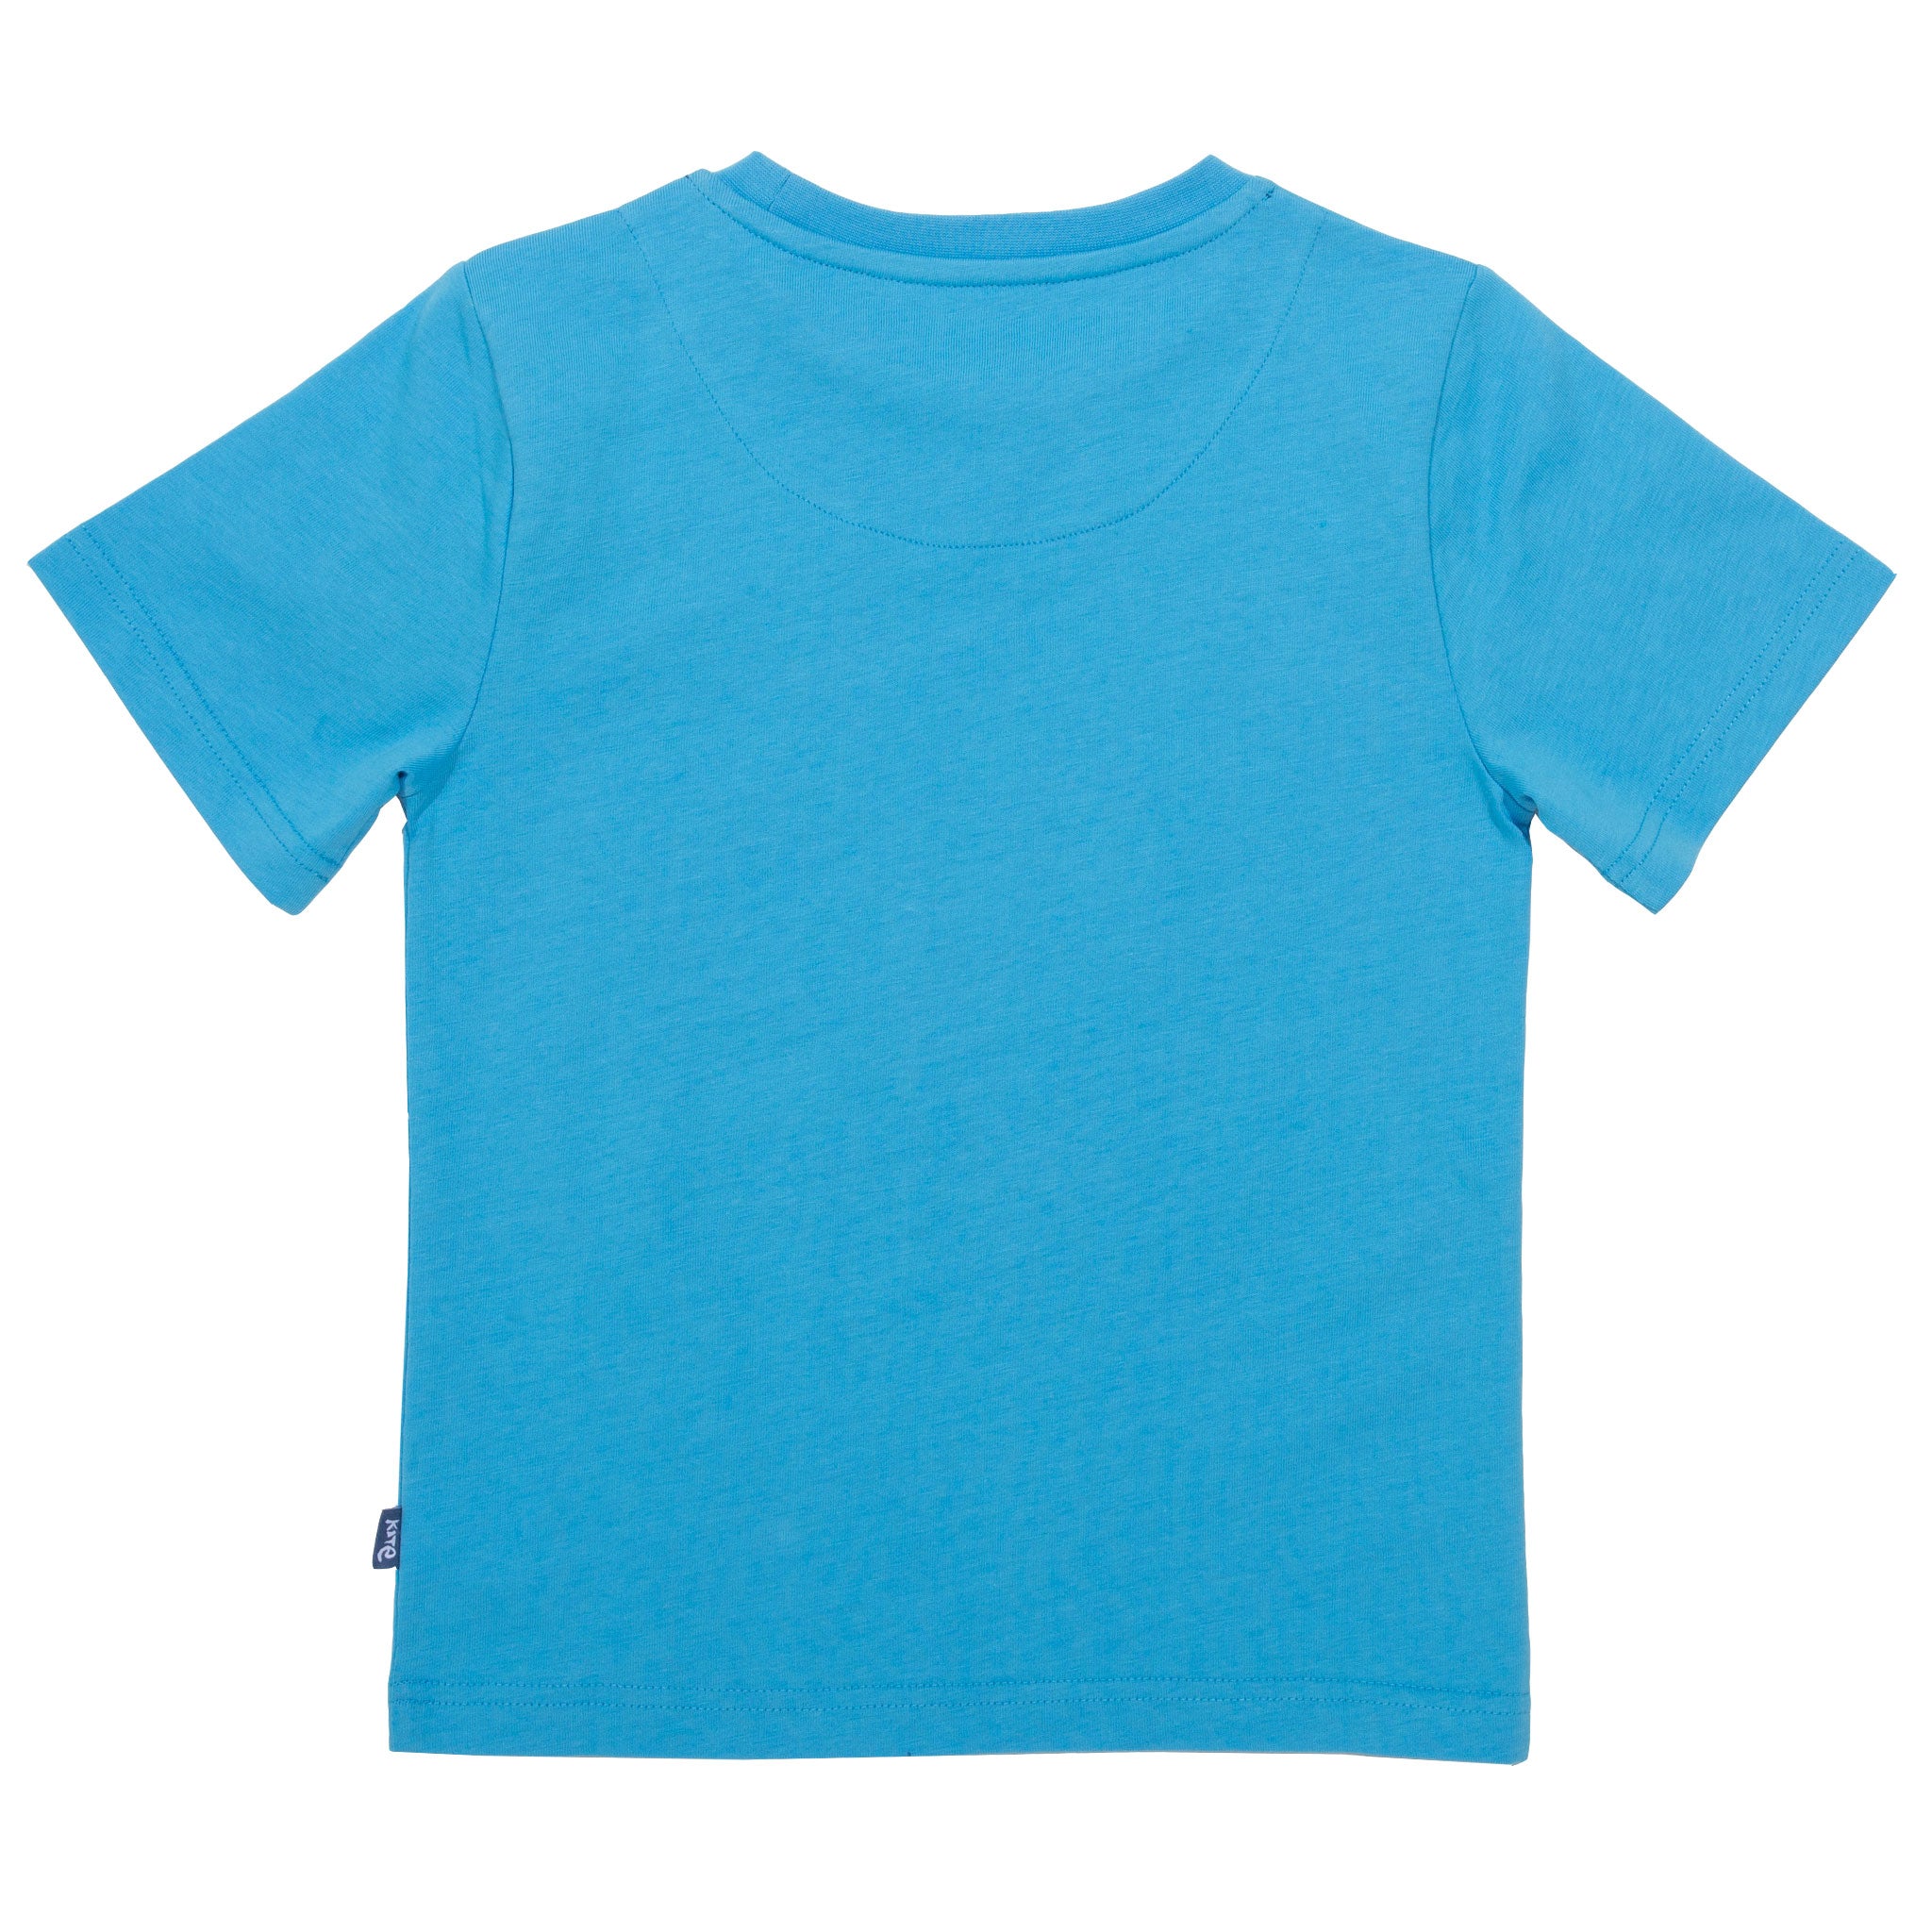 Kite T-Shirt Short Sleeve - Camo Shark